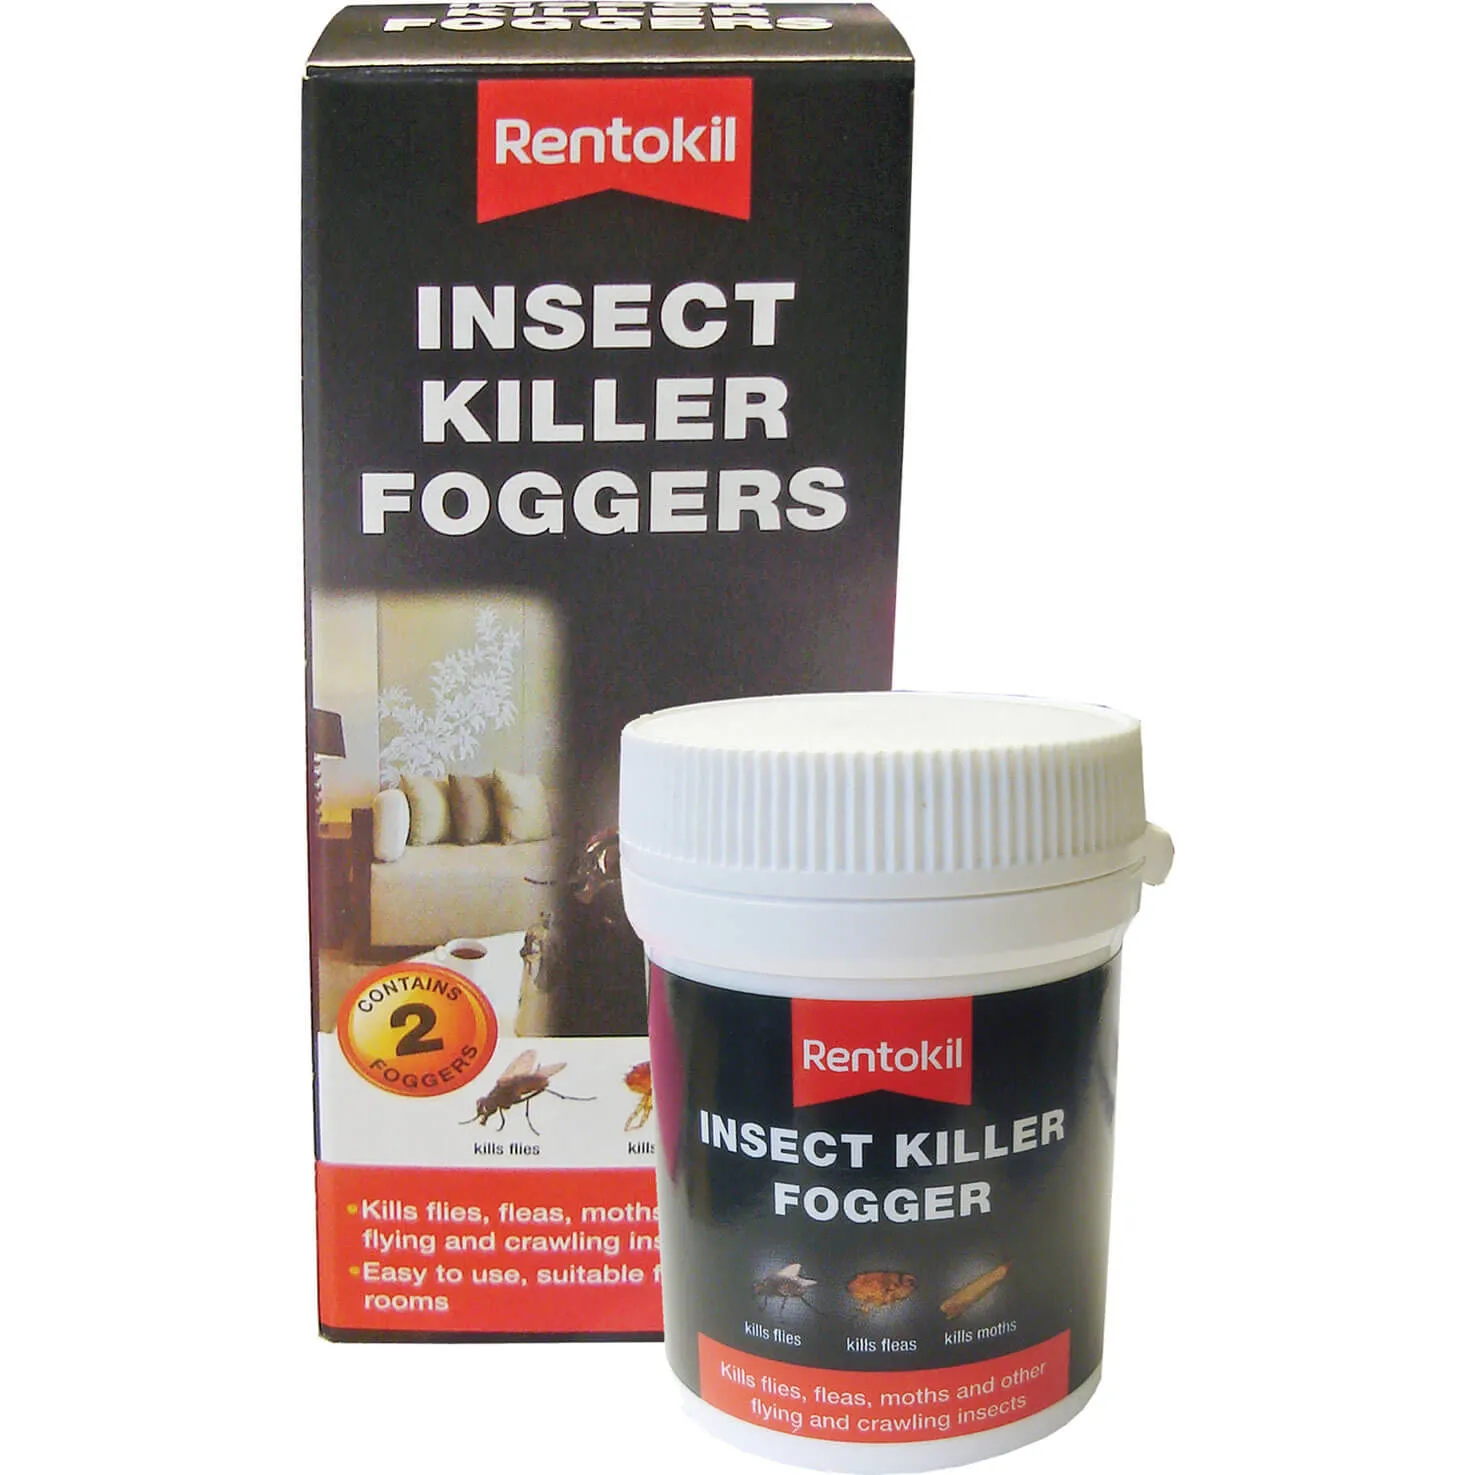 Rentokil Insect Killer Foggers - Pack of 2